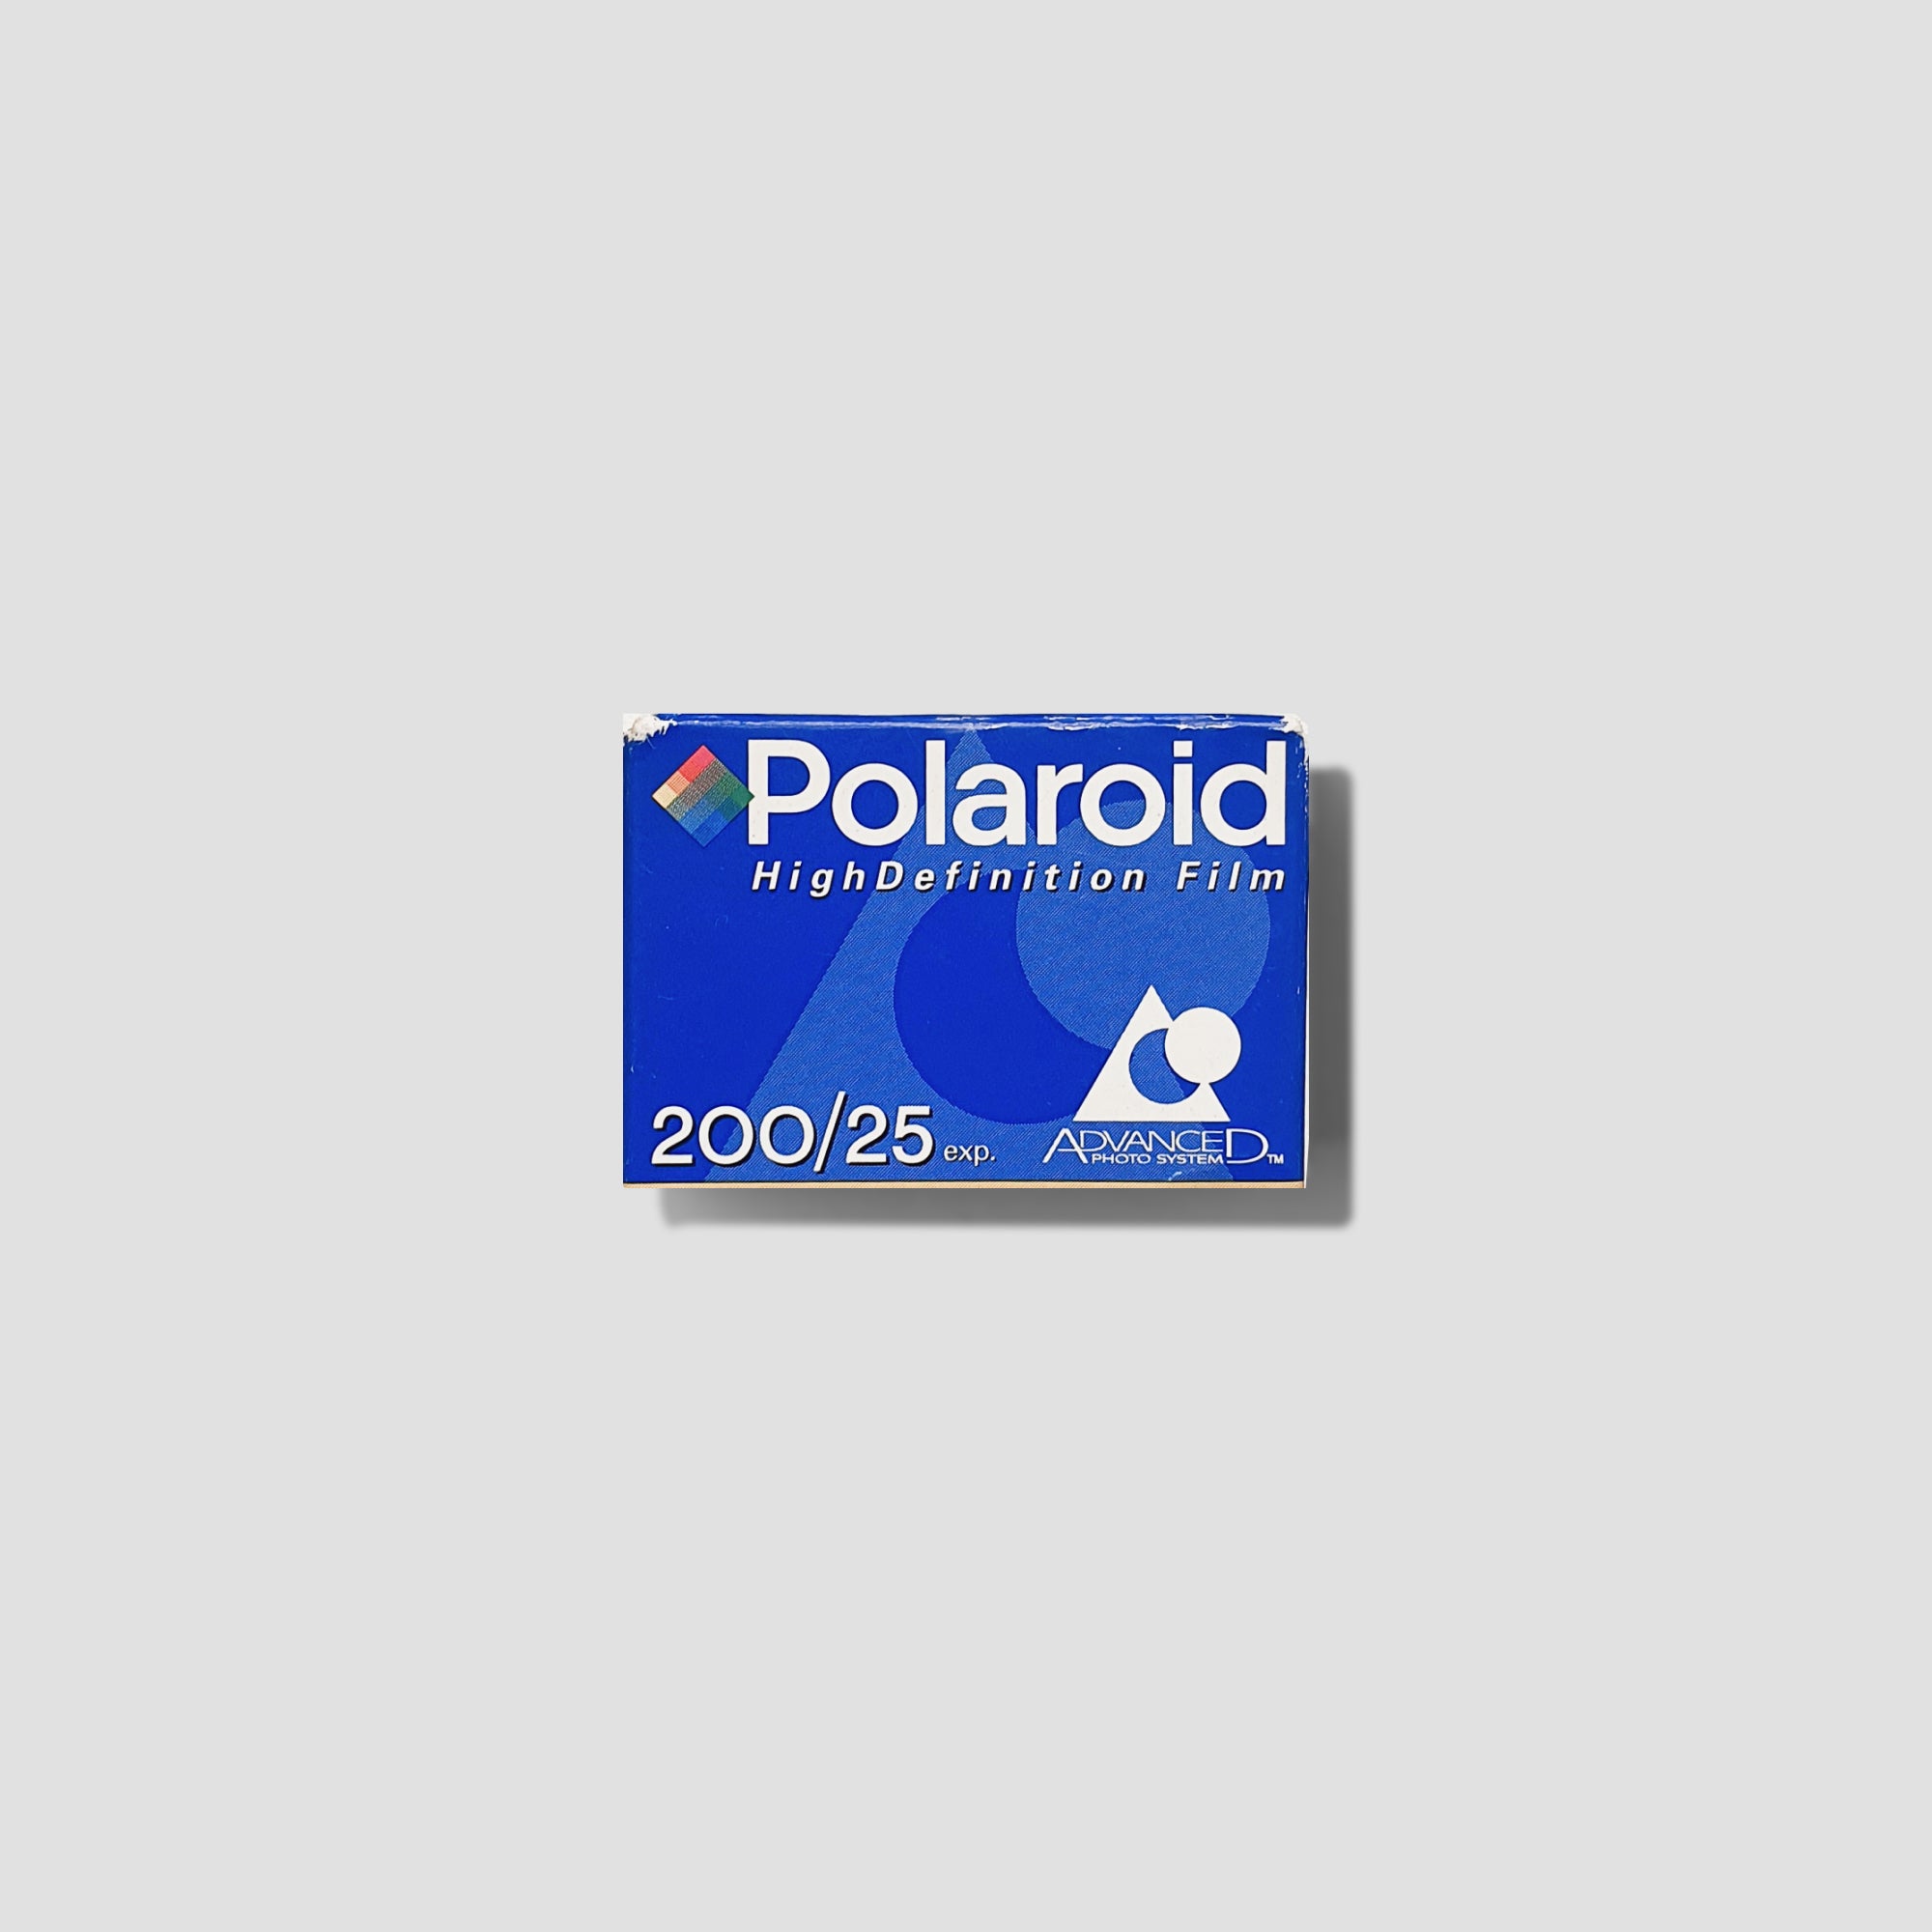 Buy Polaroid APS 200/25 now at Analogue Amsterdam